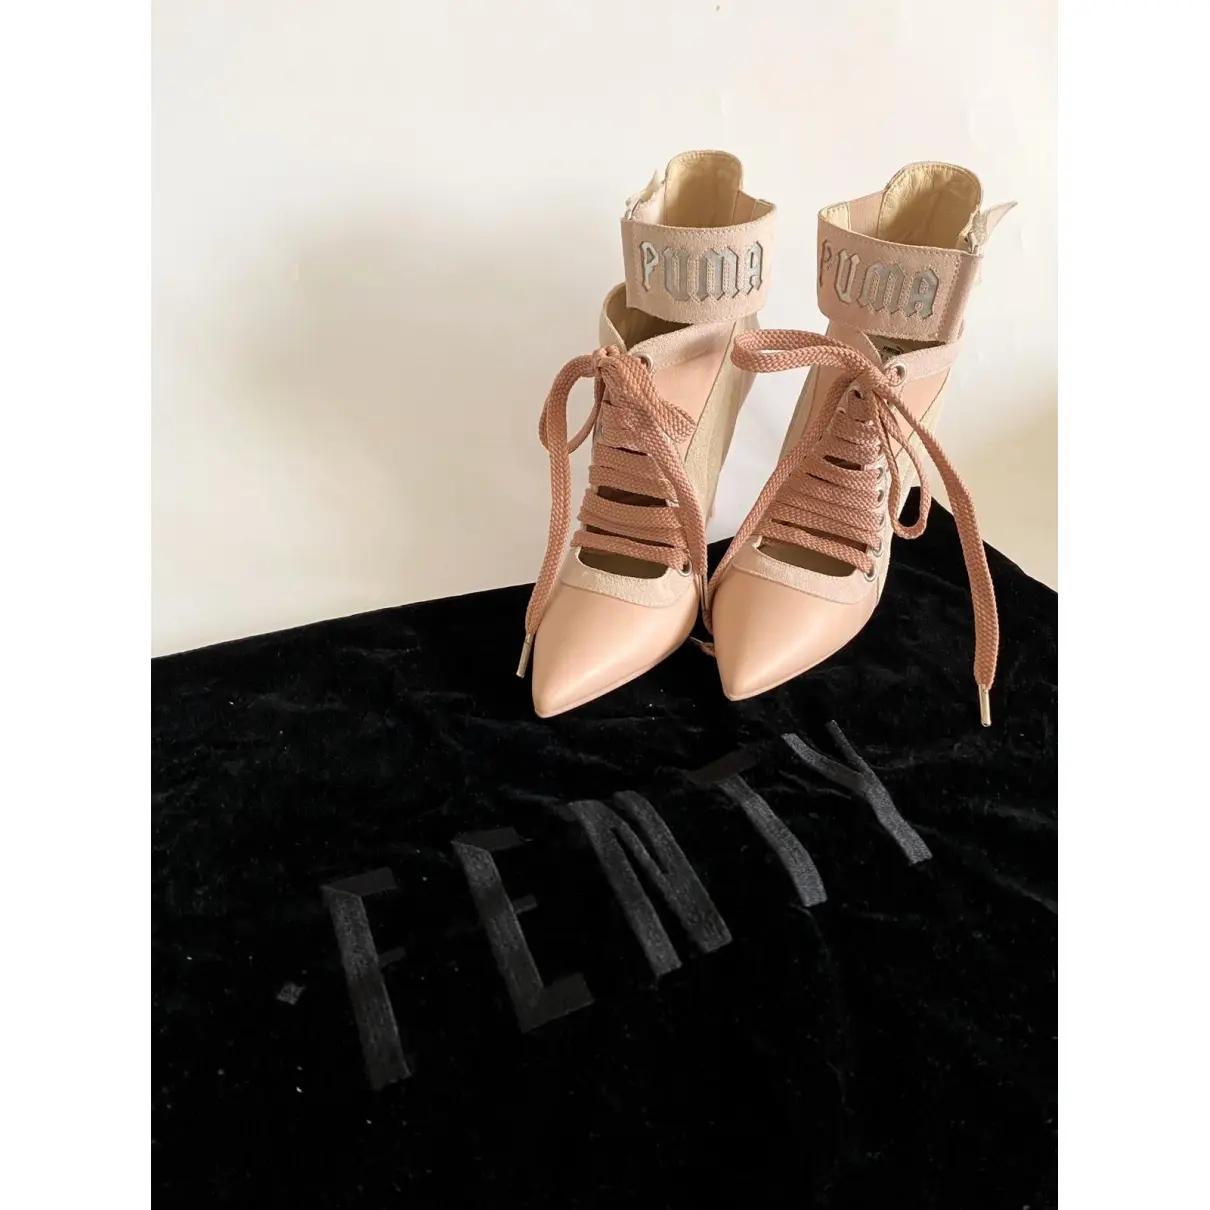 Buy Fenty x Puma Leather heels online